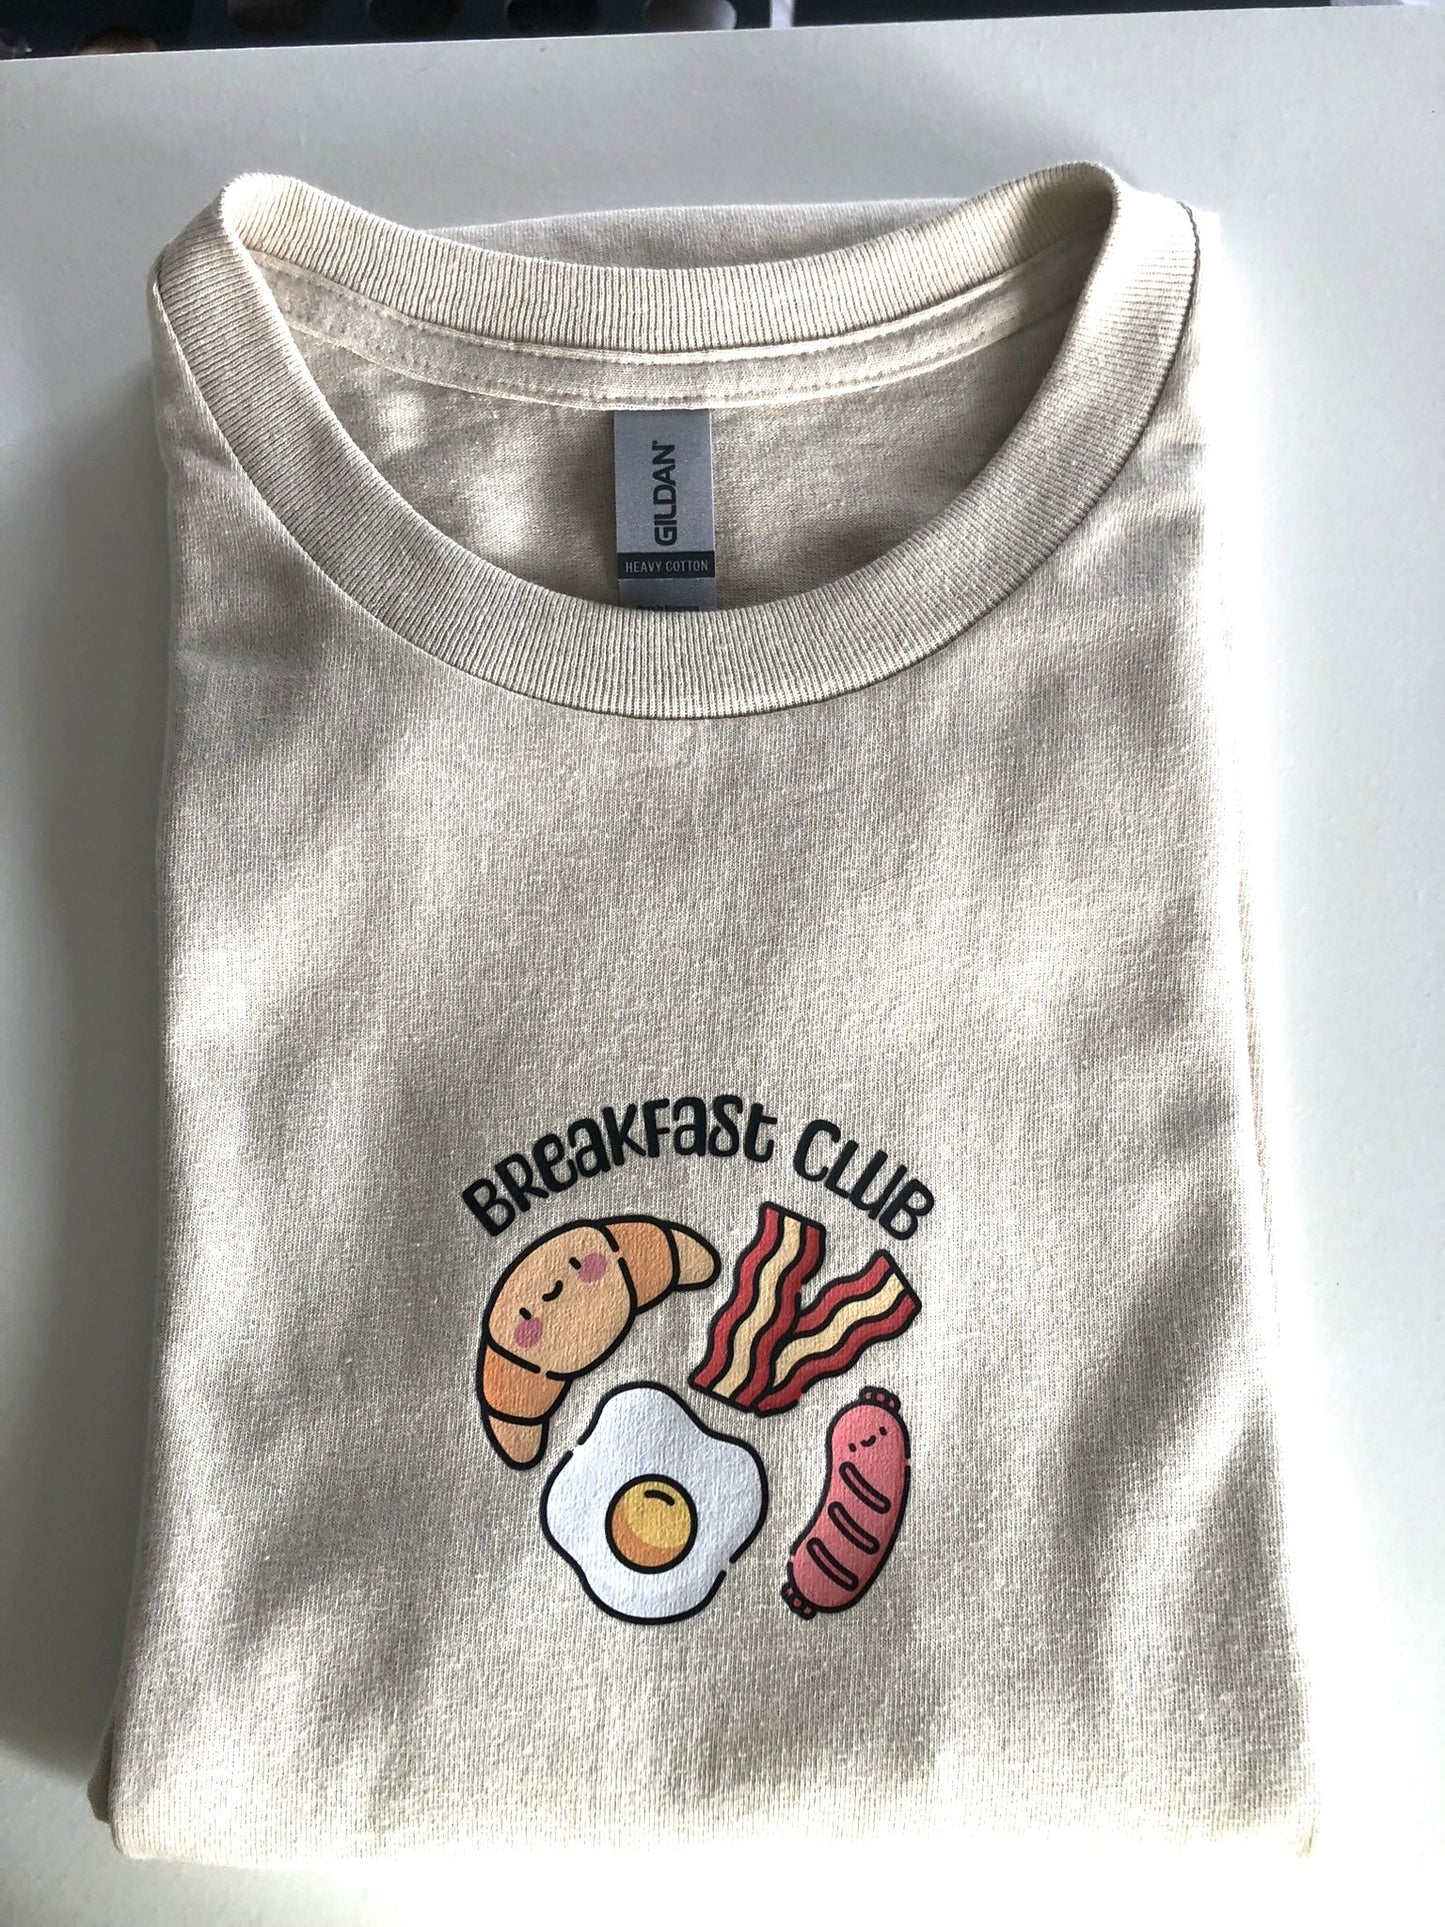 Breakfast Club Unisex T-shirt